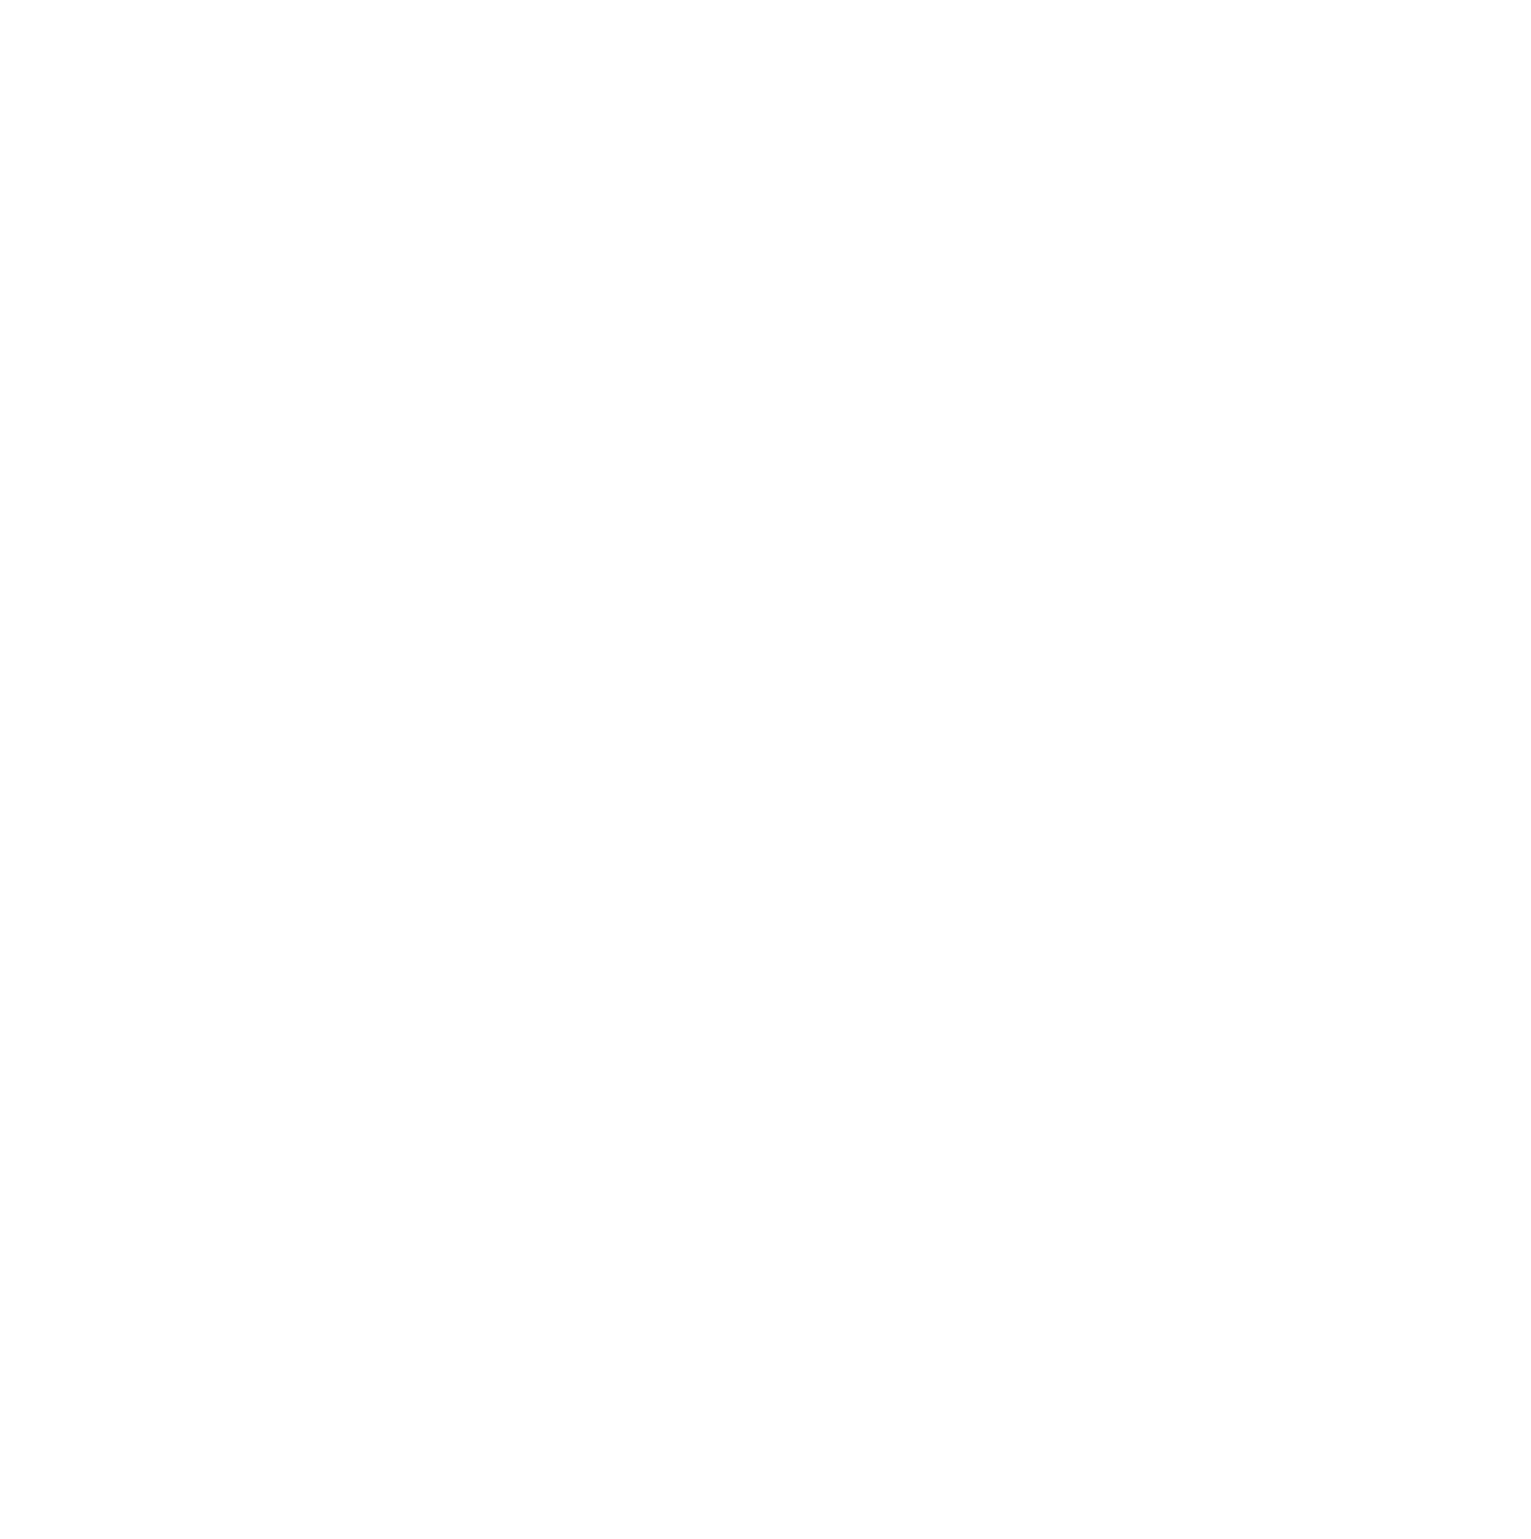 Aktieselskabet Schouw & Co. logo for dark backgrounds (transparent PNG)